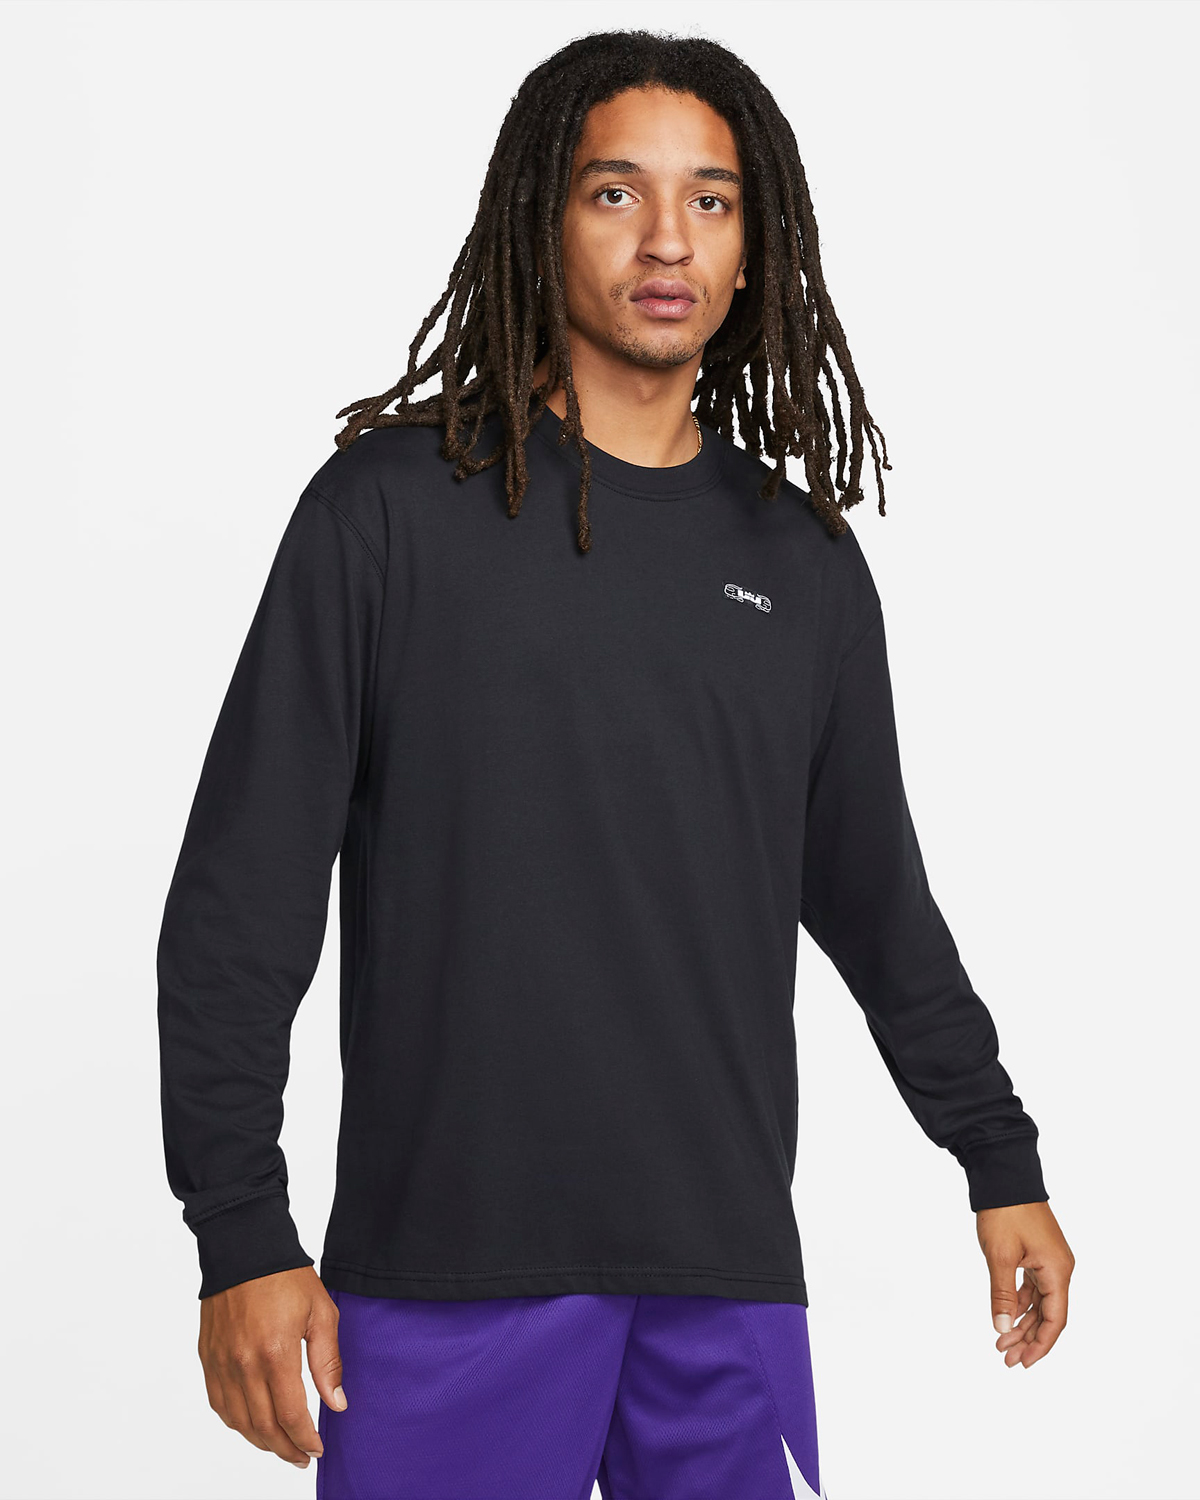 Nike-LeBron-20-Long-Sleeve-T-Shirt-Black-Purple-1